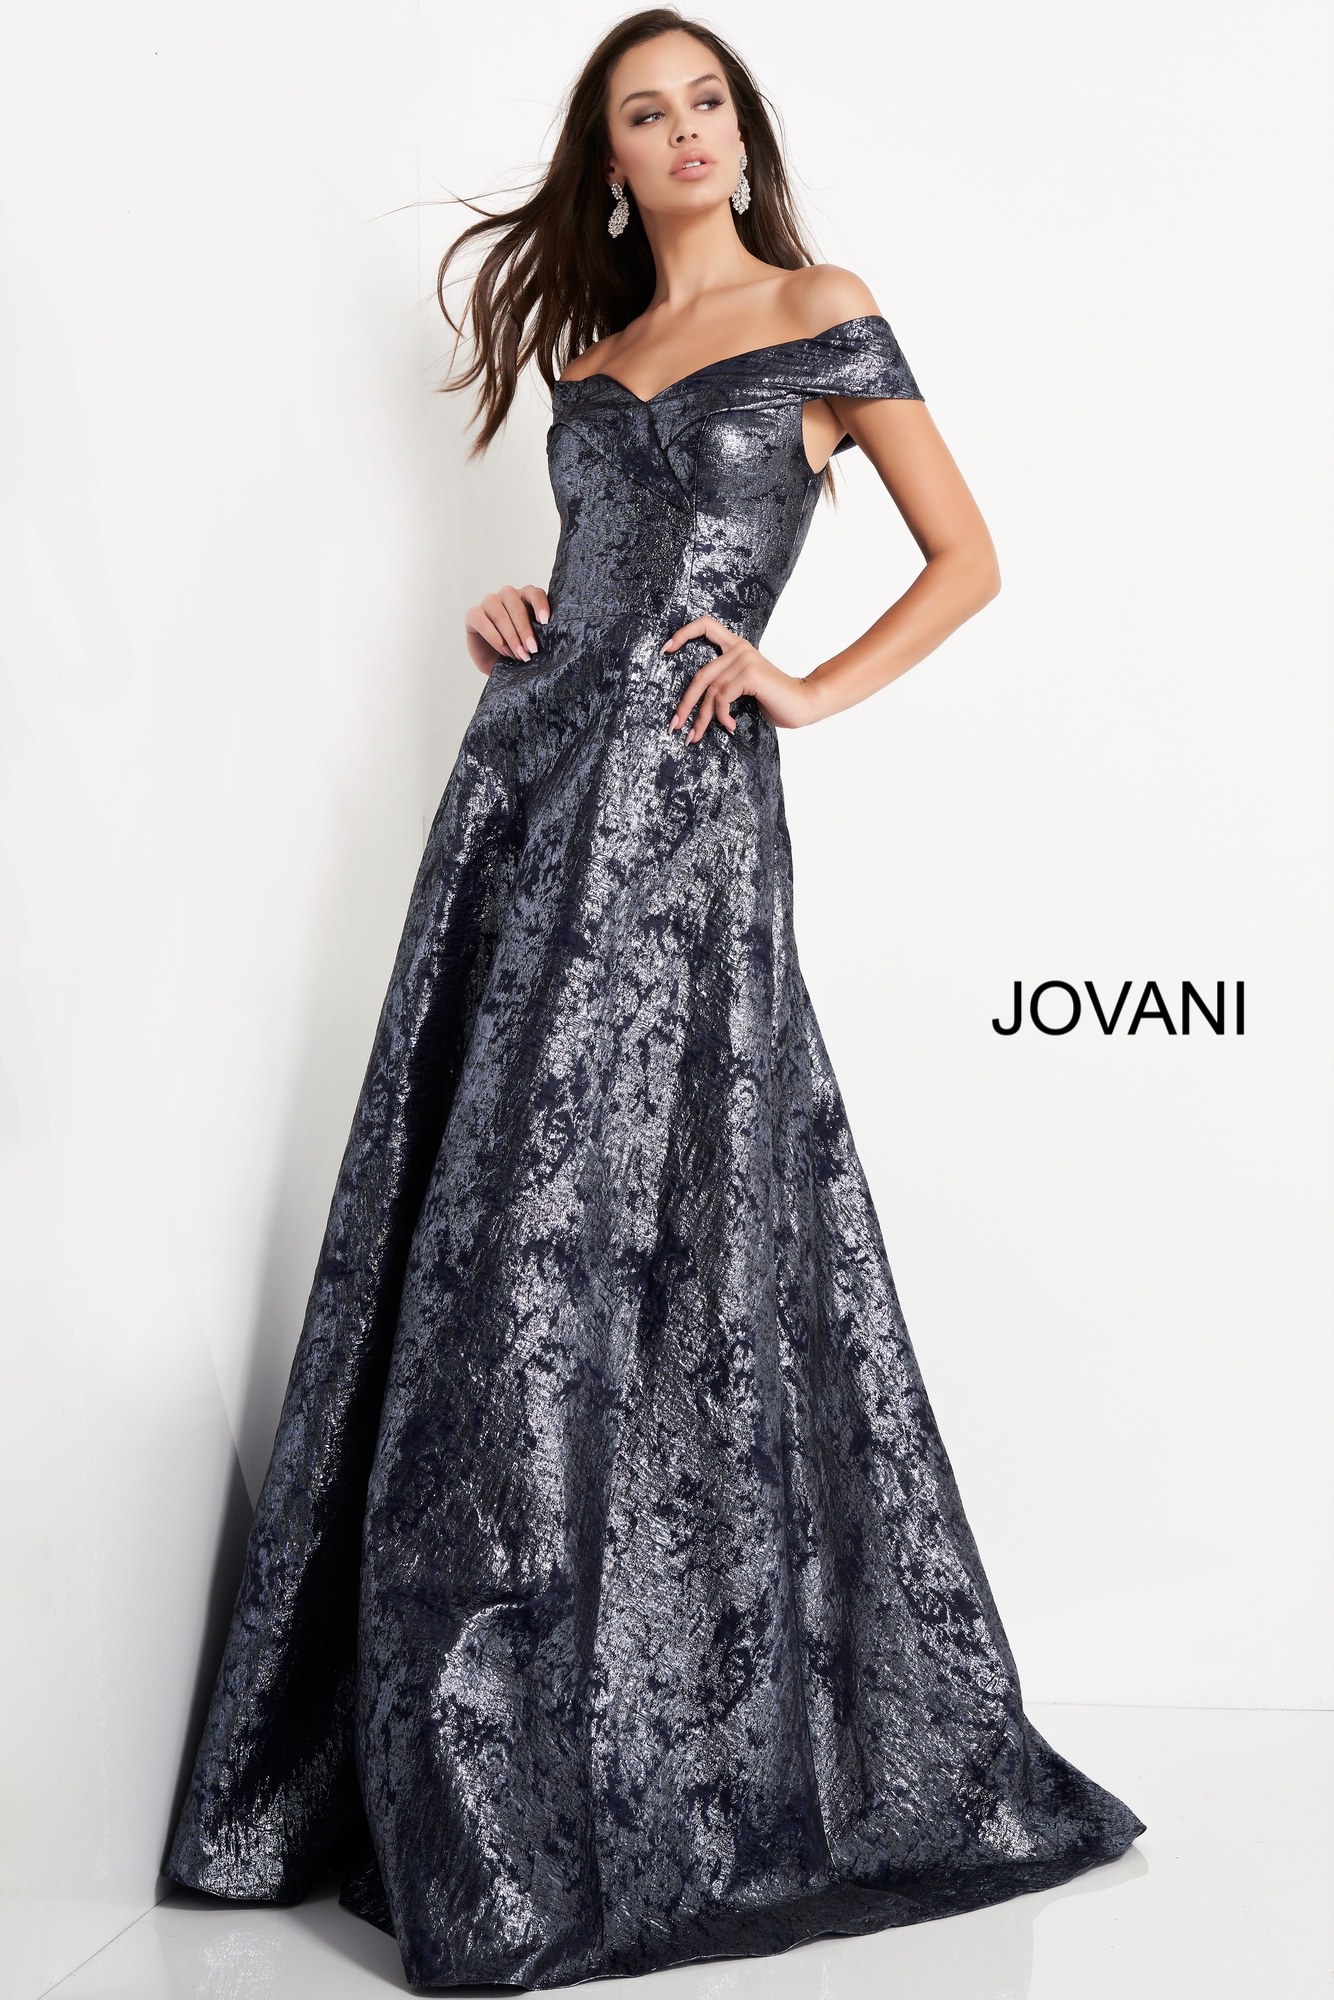 Jovani 03674 Navy Metallic Off the Shoulder Evening Dress